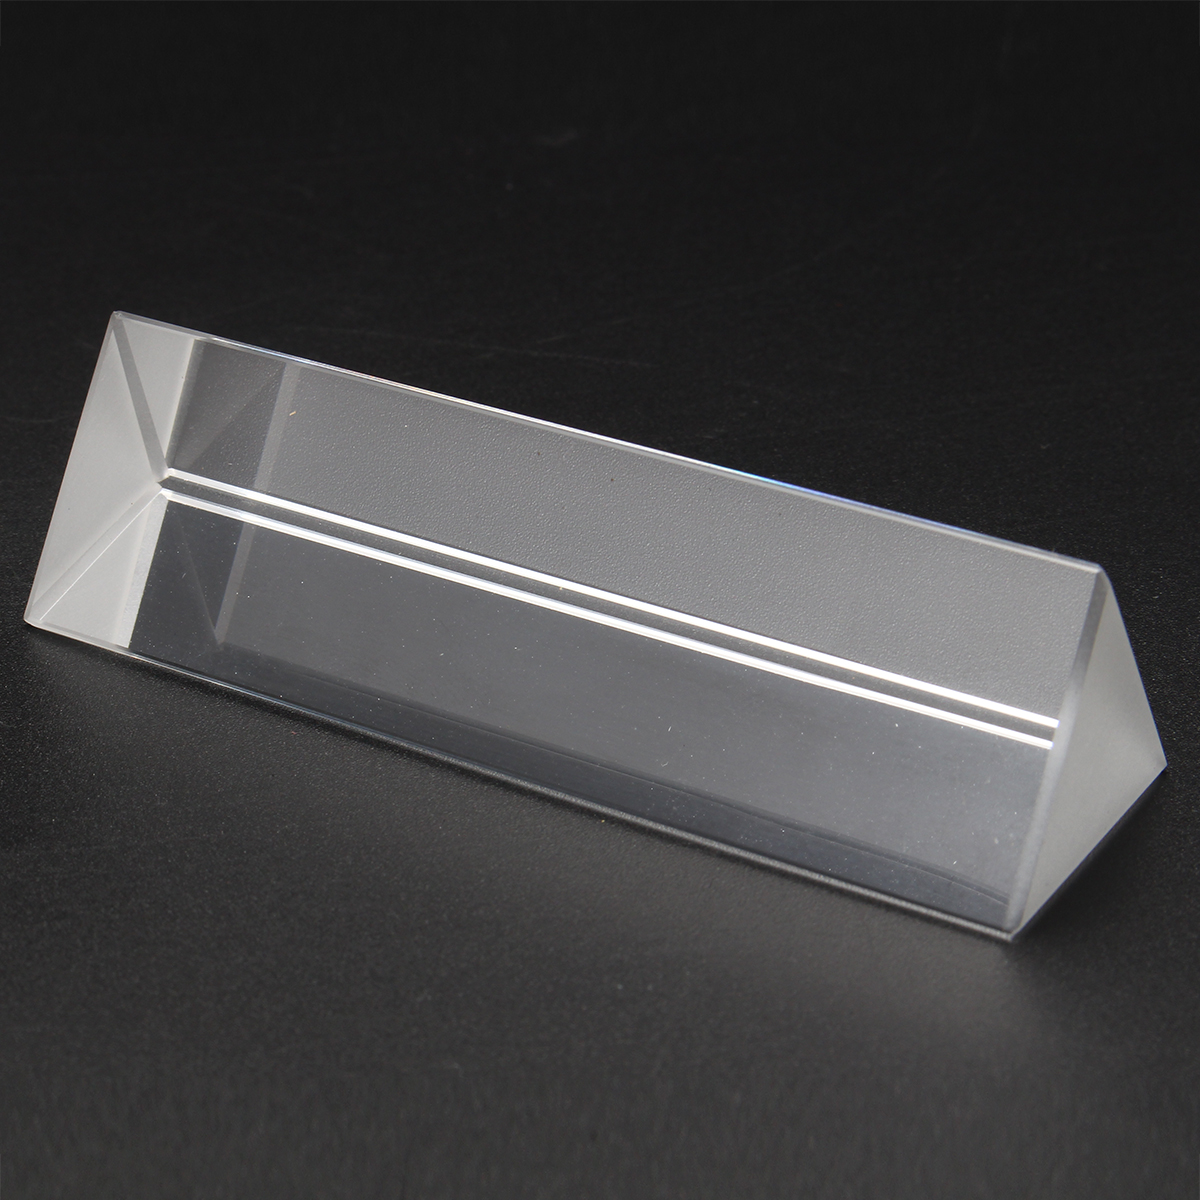 Optical-Glass-UK-Triple-Prism-for-Physical-Light-Spectrum-Teaching-Experiment-ModelHome-Decor-1451941-1